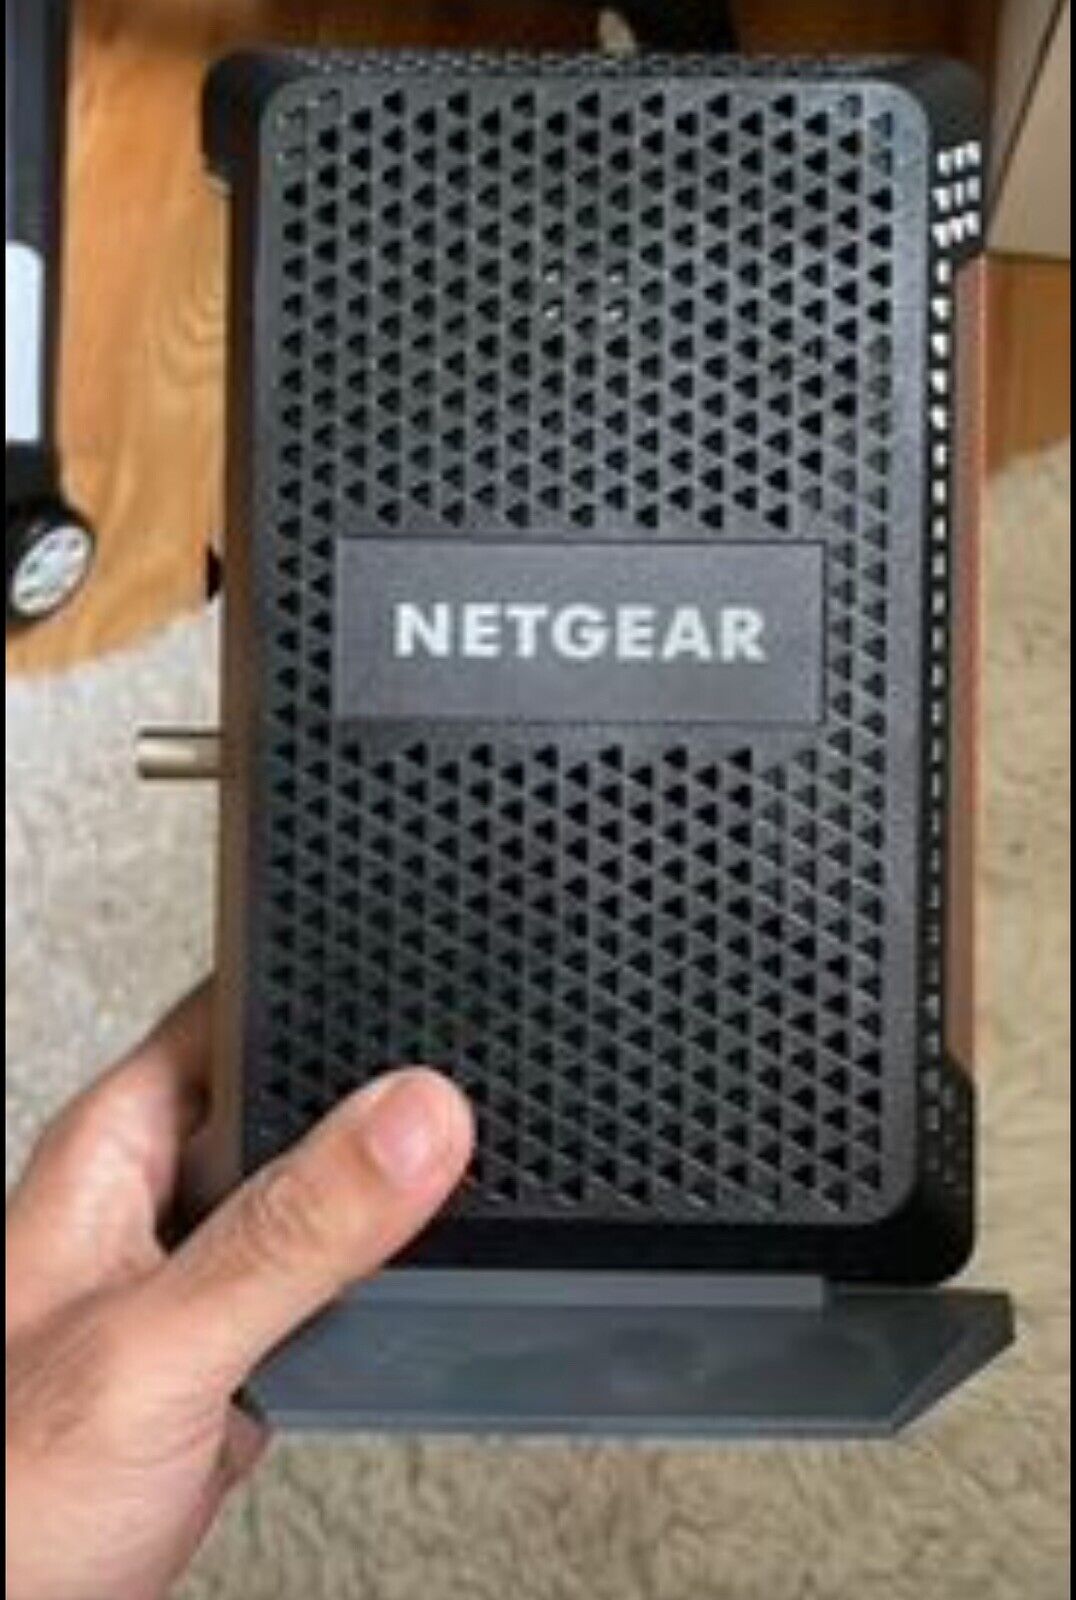 NETGEAR Nighthawk CM1100 Cable Modem